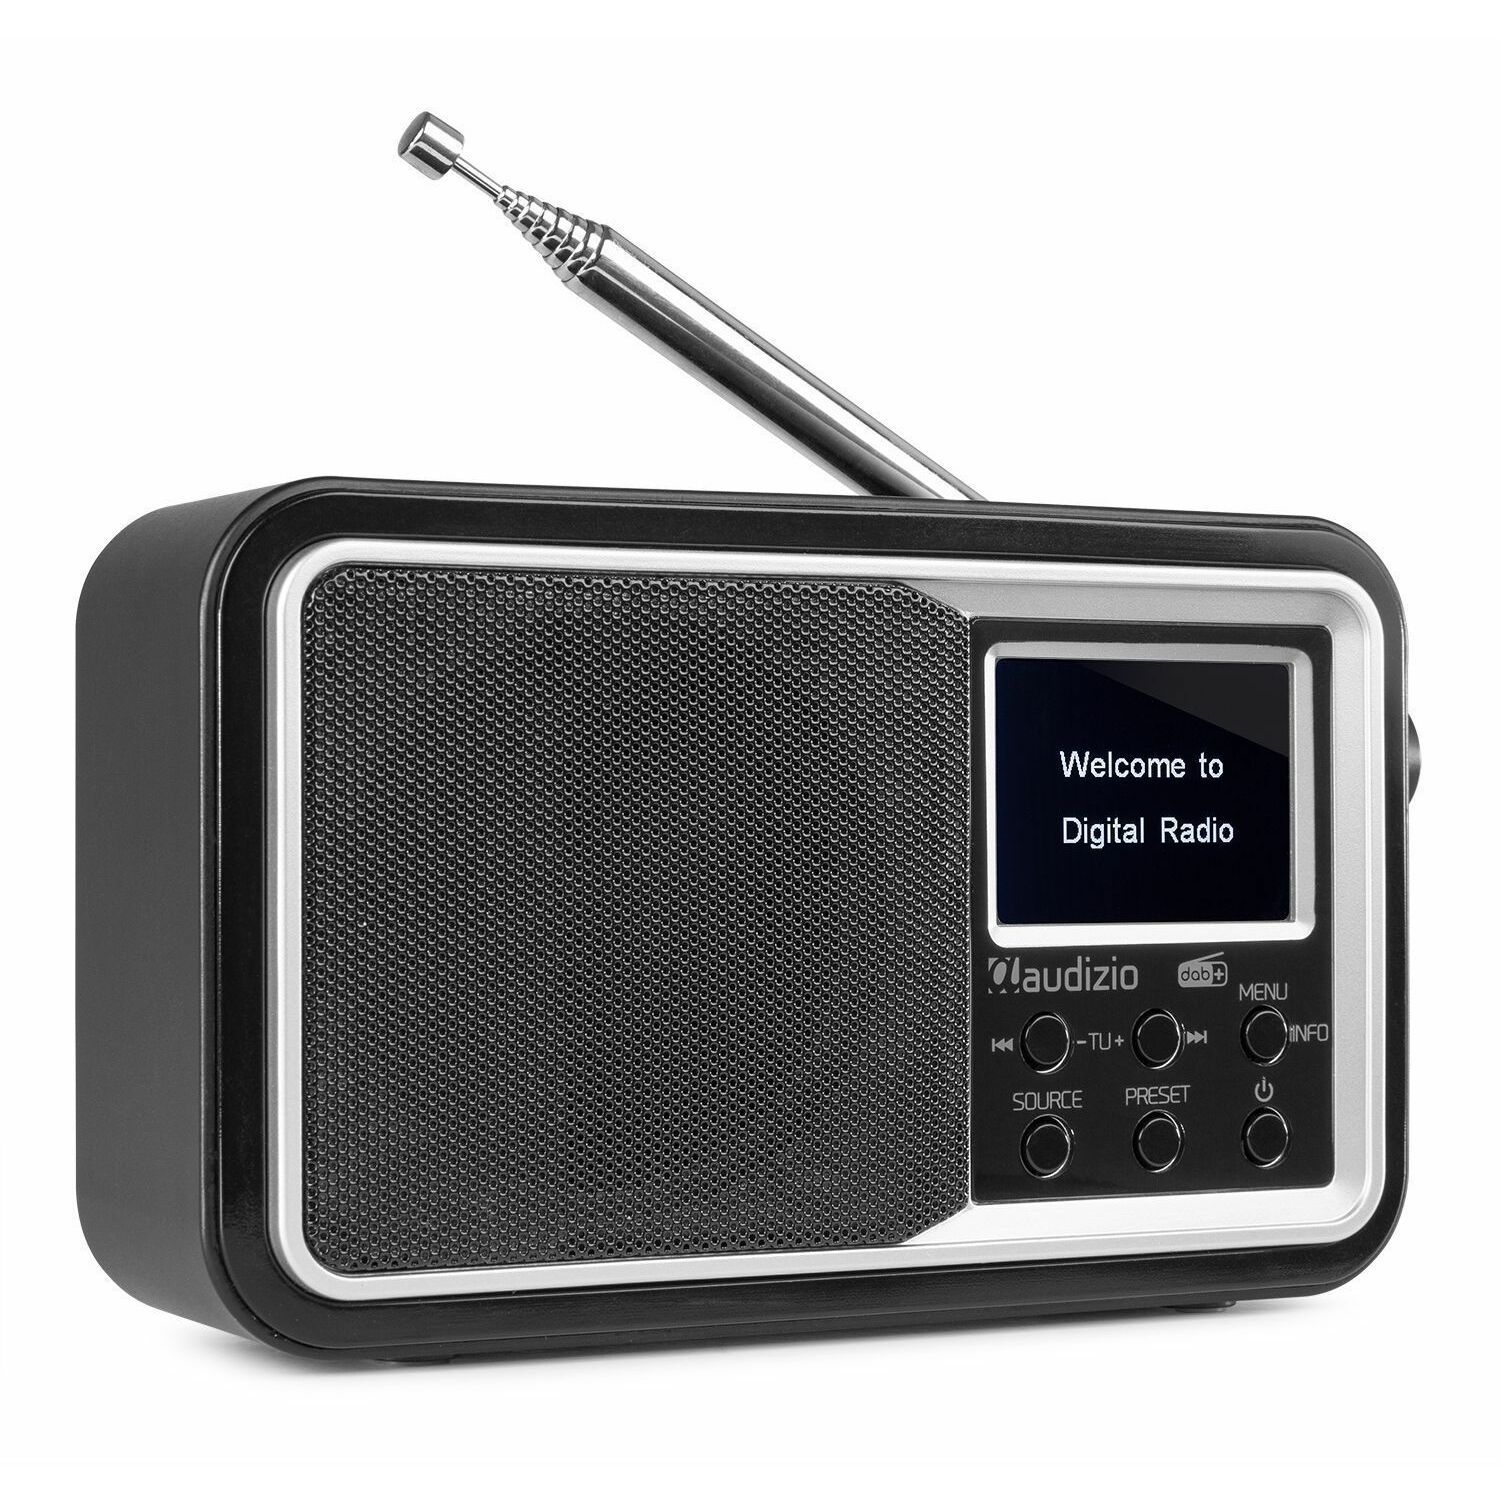 Audizio Parma draagbare DAB radio met Bluetooth en FM radio - Zwart kopen?